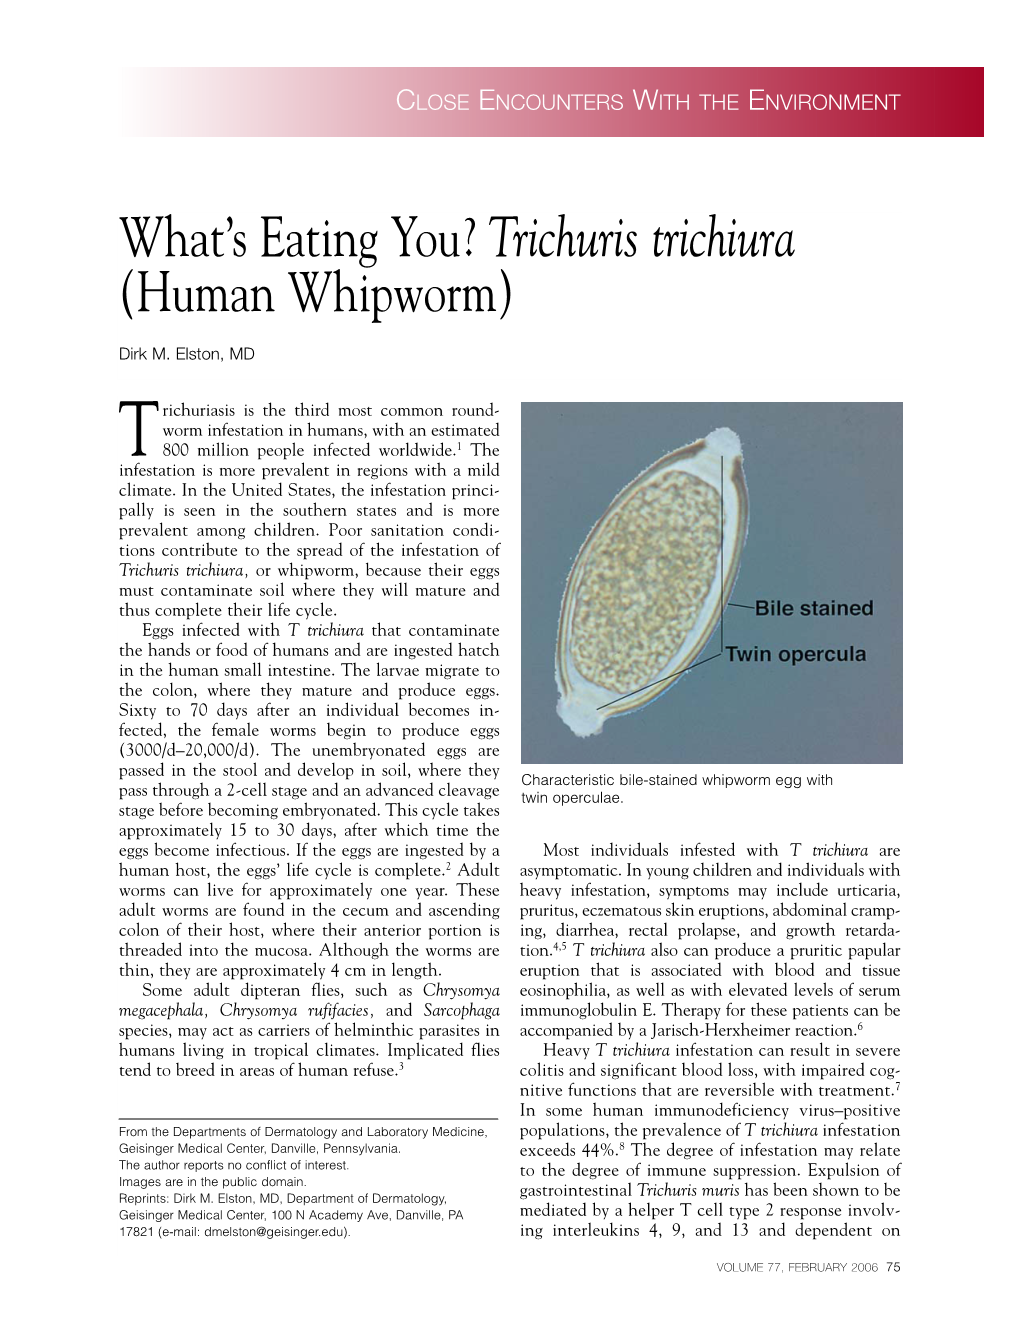 Trichuris Trichiura (Human Whipworm)